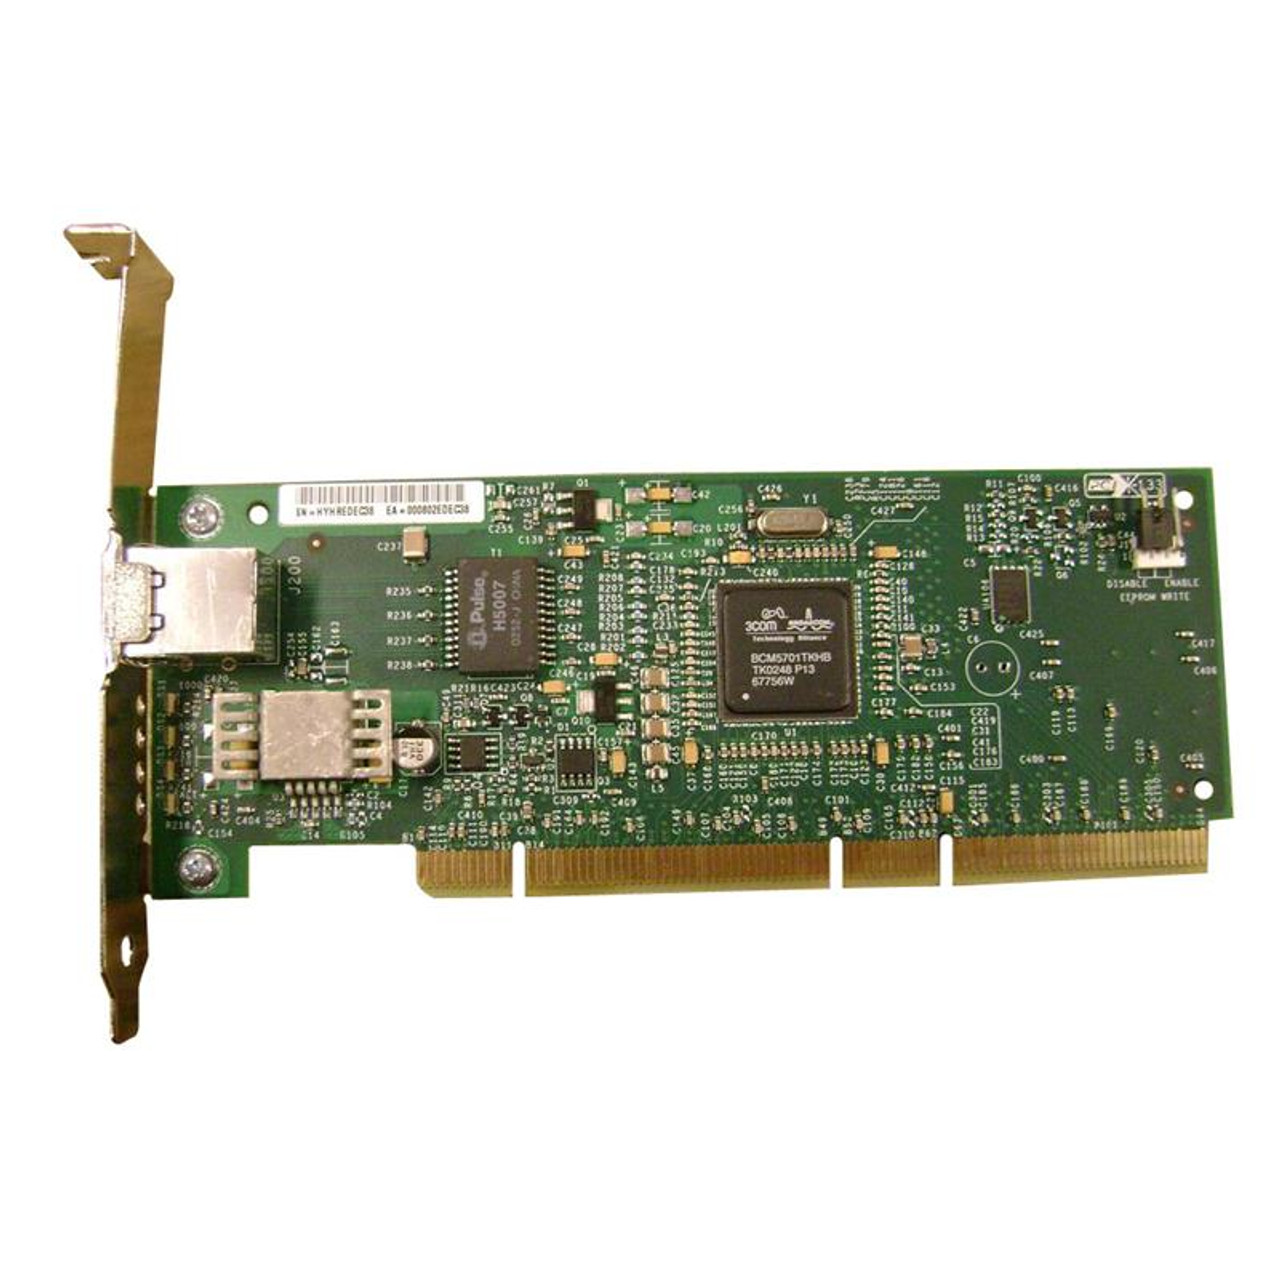 284848-001 - HP NC7770 PCI-X 64-Bit 133MHz 10/100/1000Mbps Gigabit Ethernet Network Interface Card (NIC)